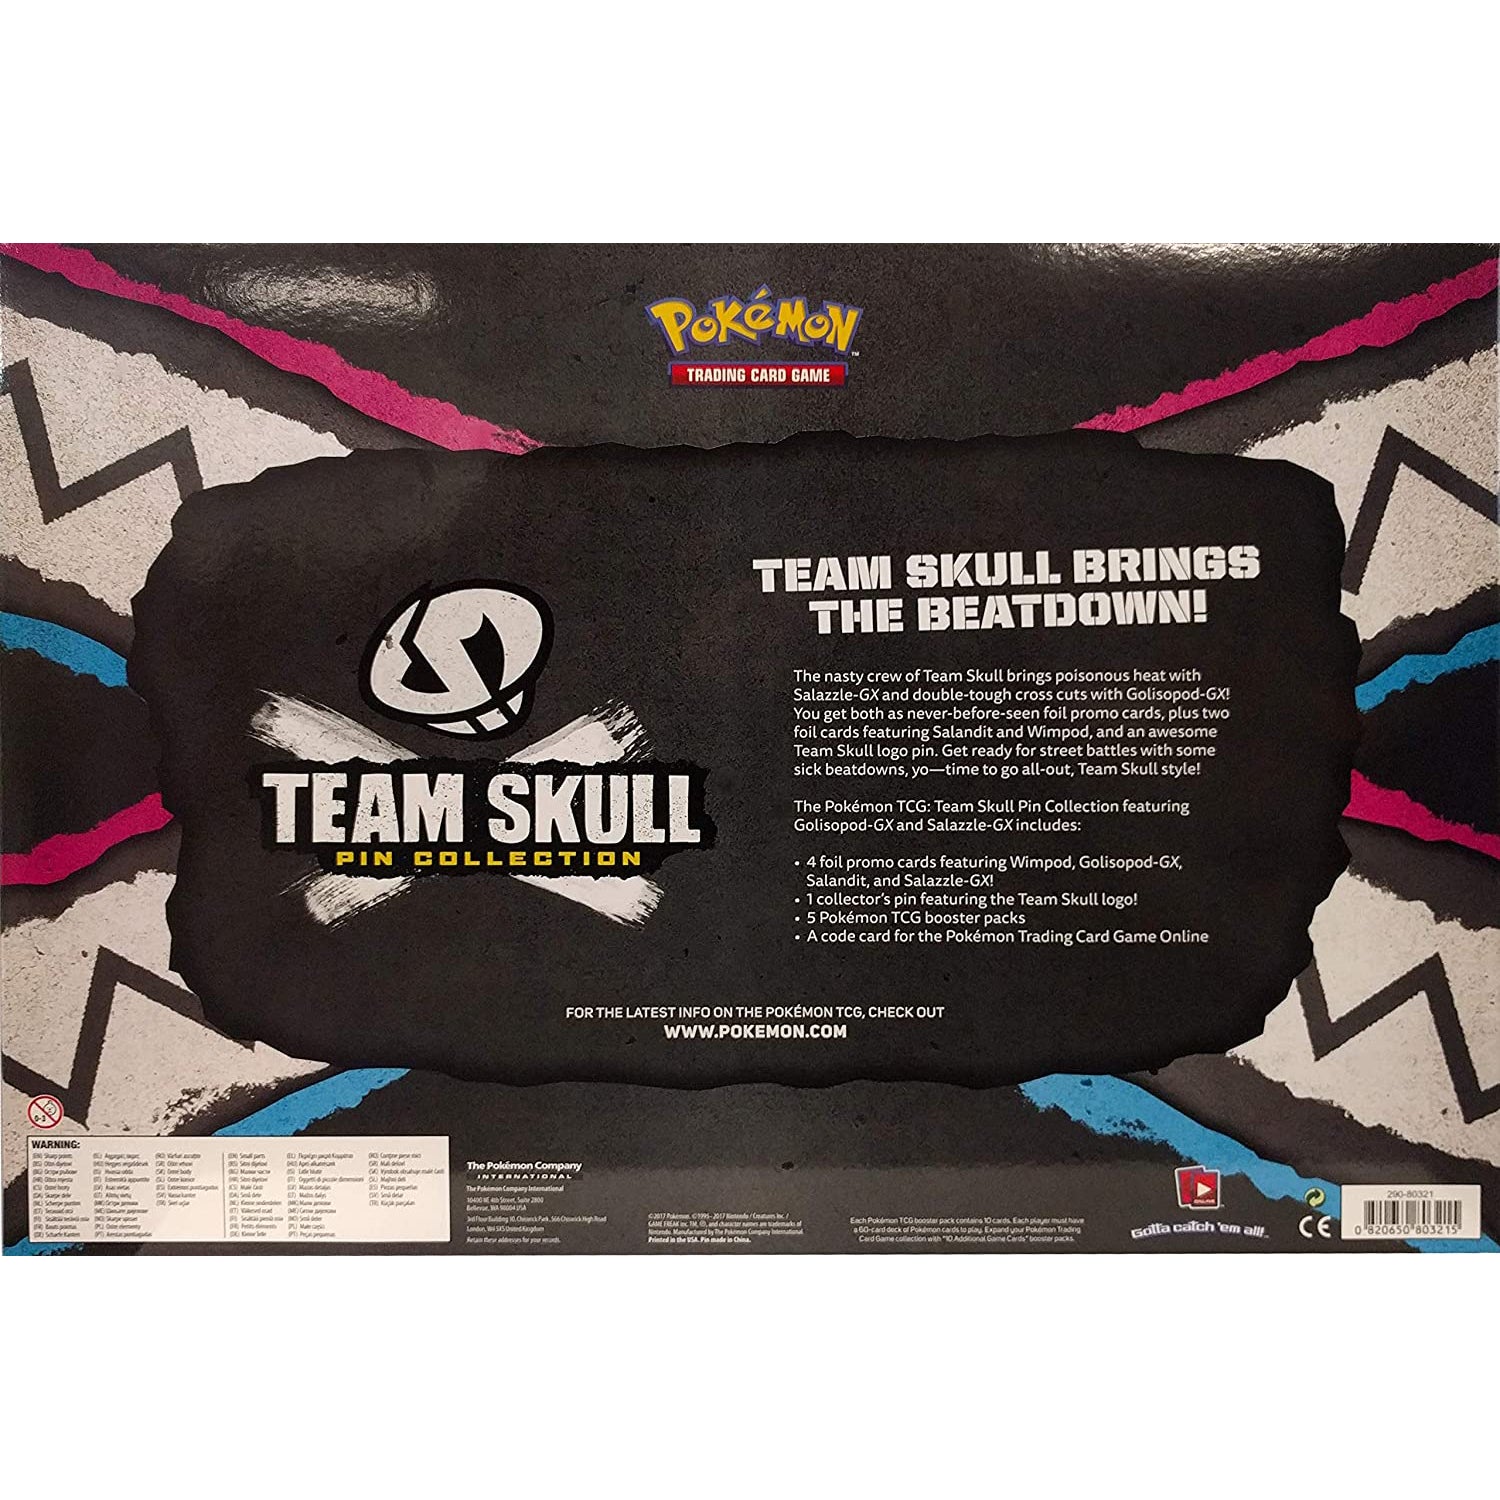 Pokemon Team Skull Box Contents